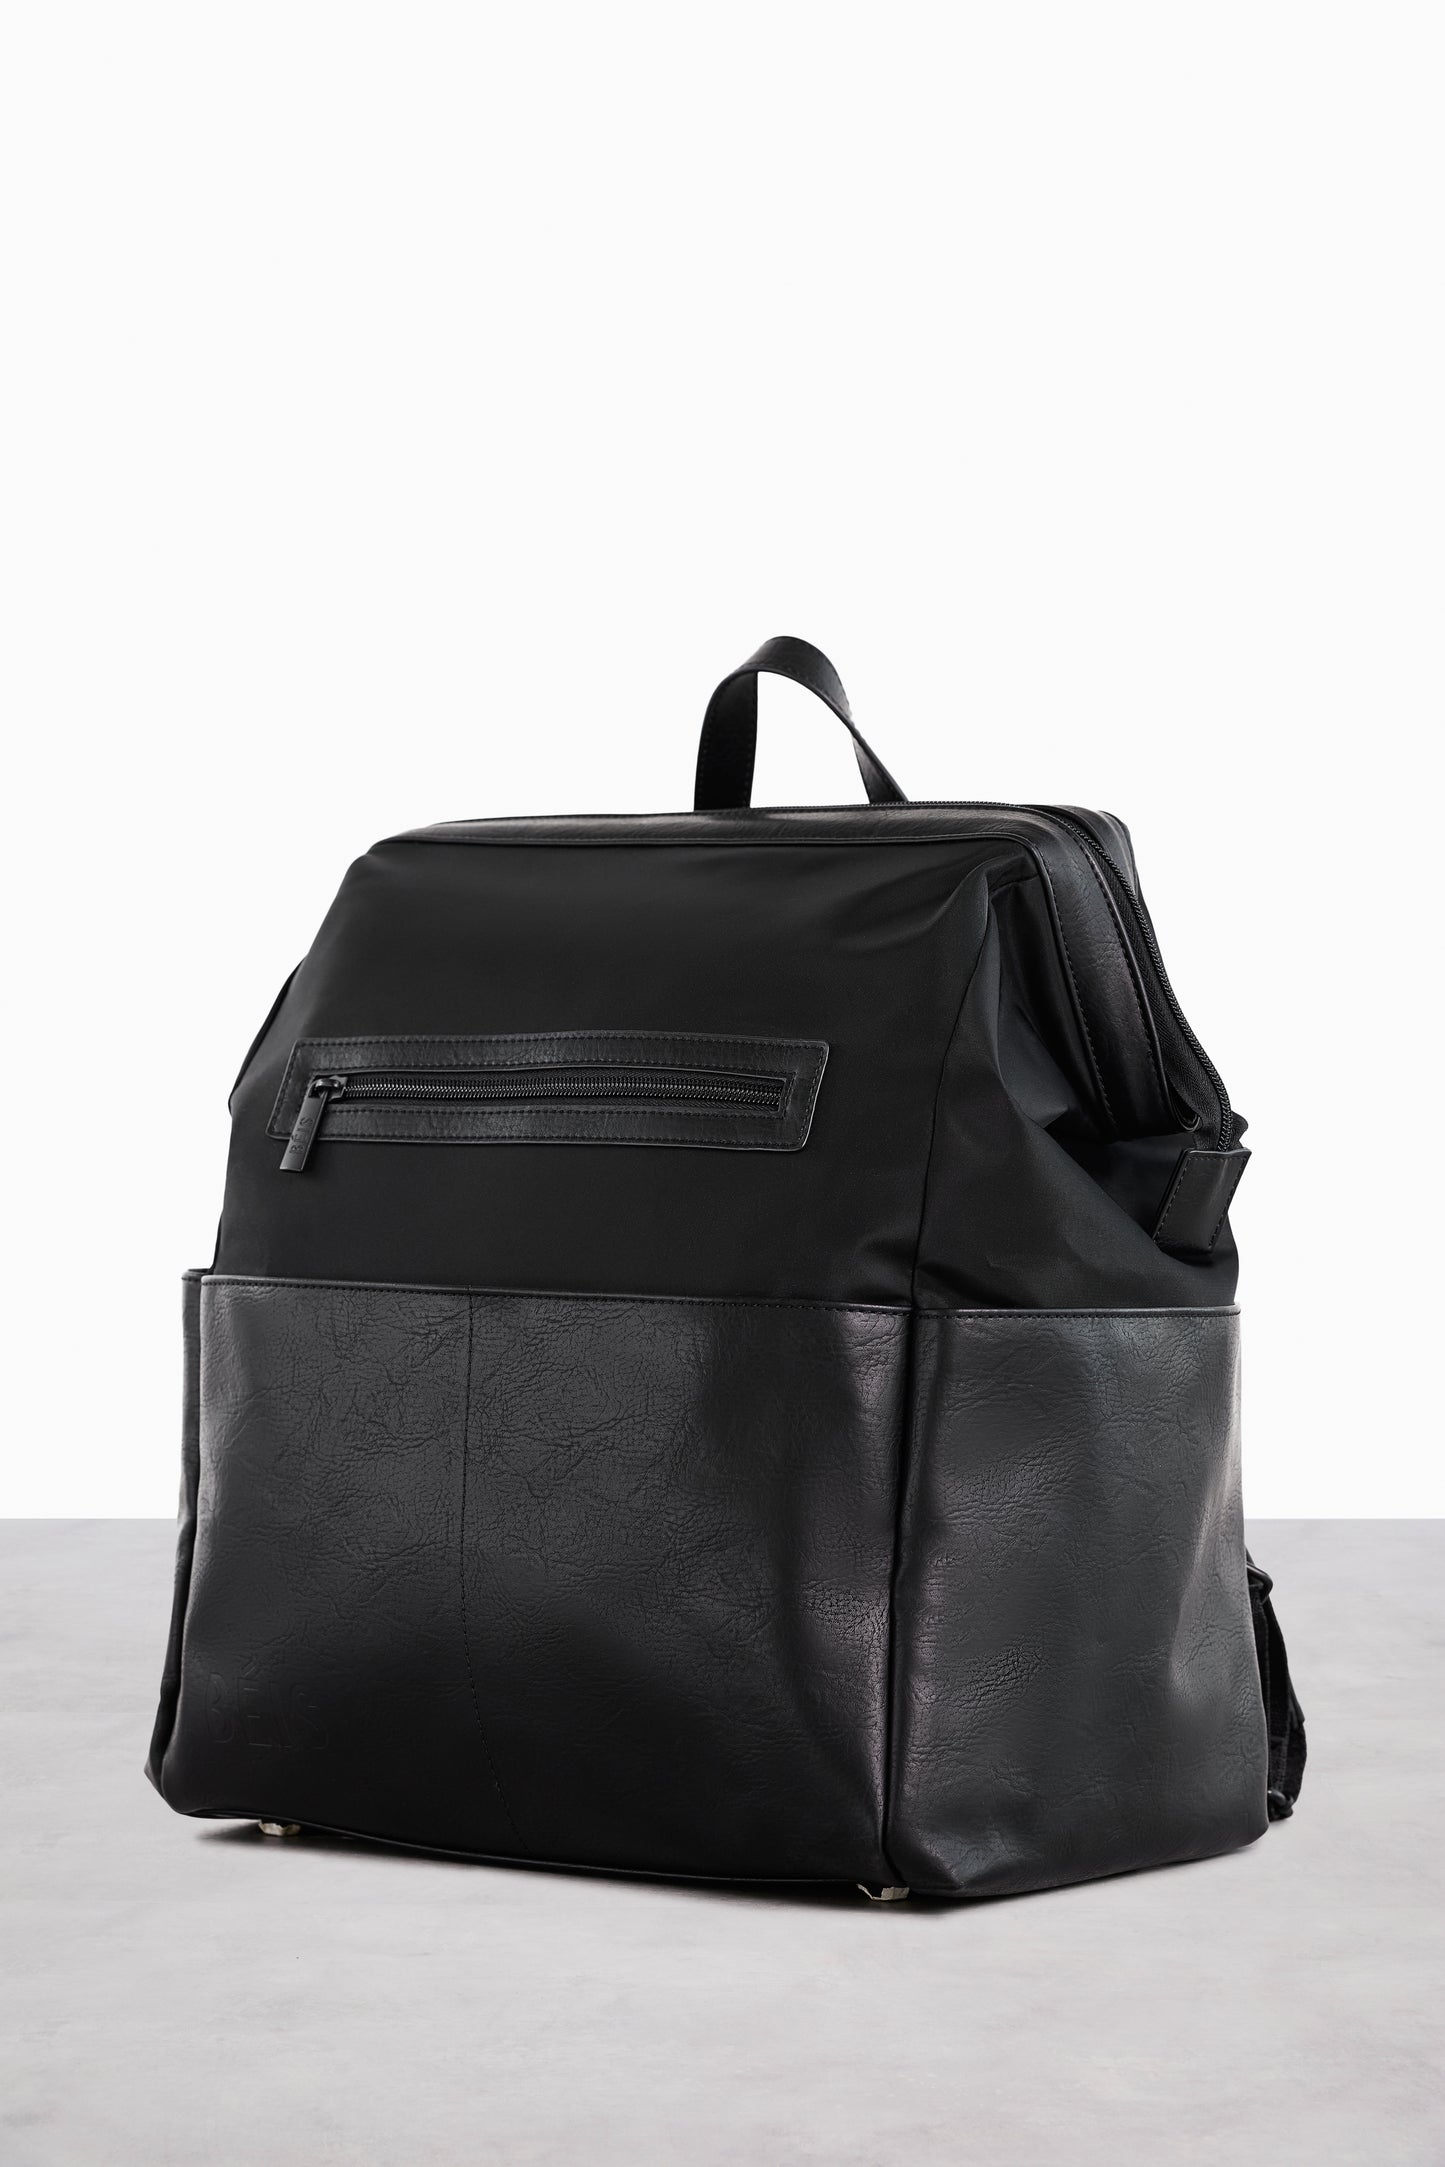 The Backpack Diaper Bag in Black